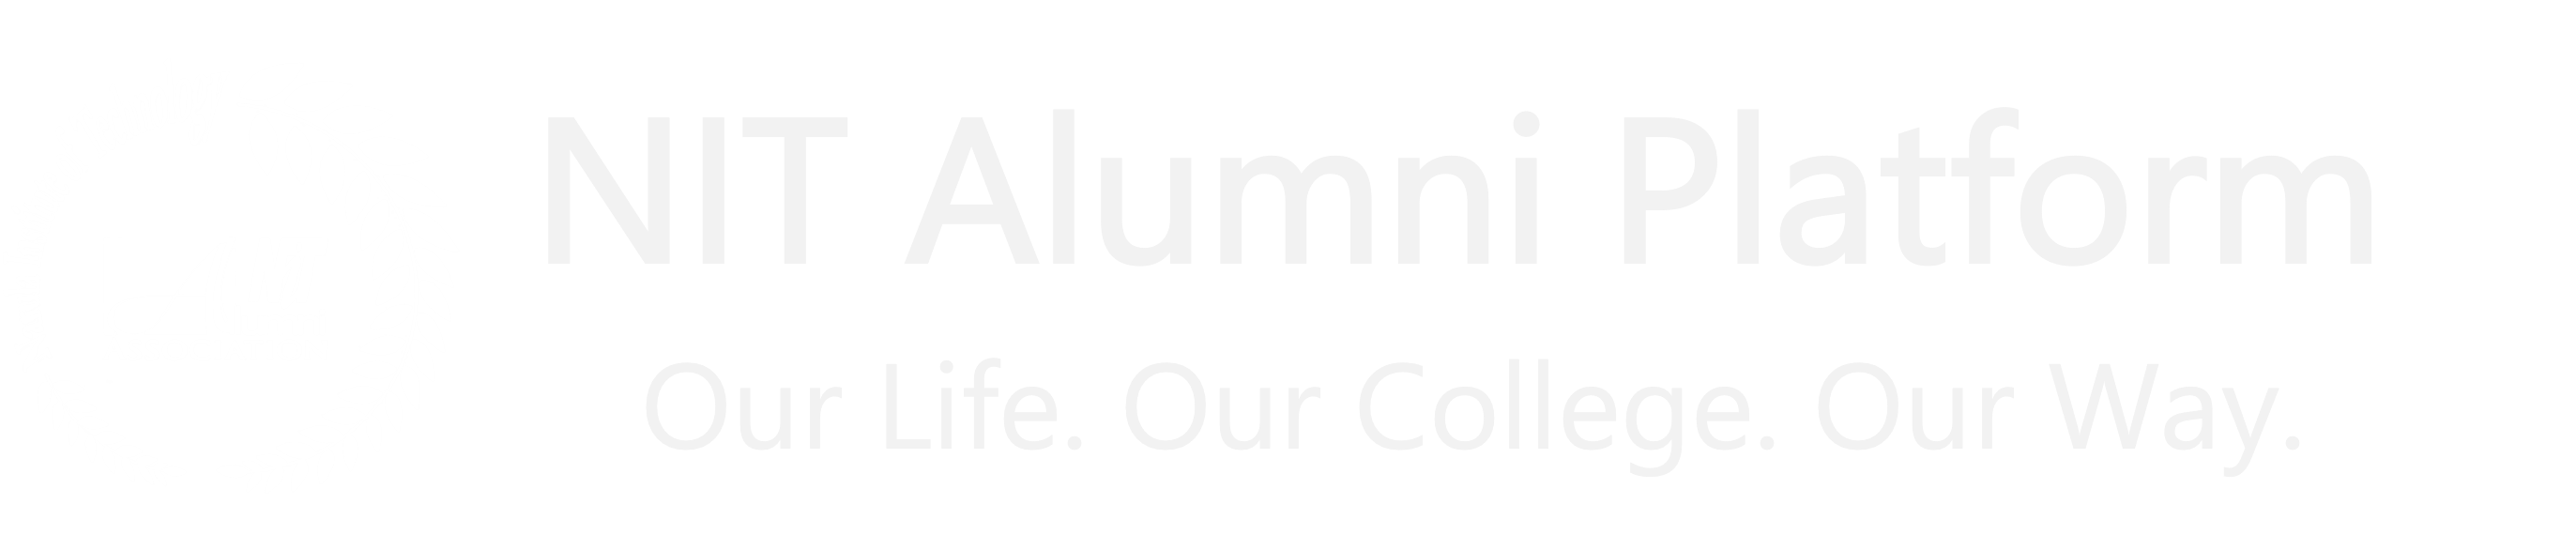 nit_alumni_platform_logo_footer